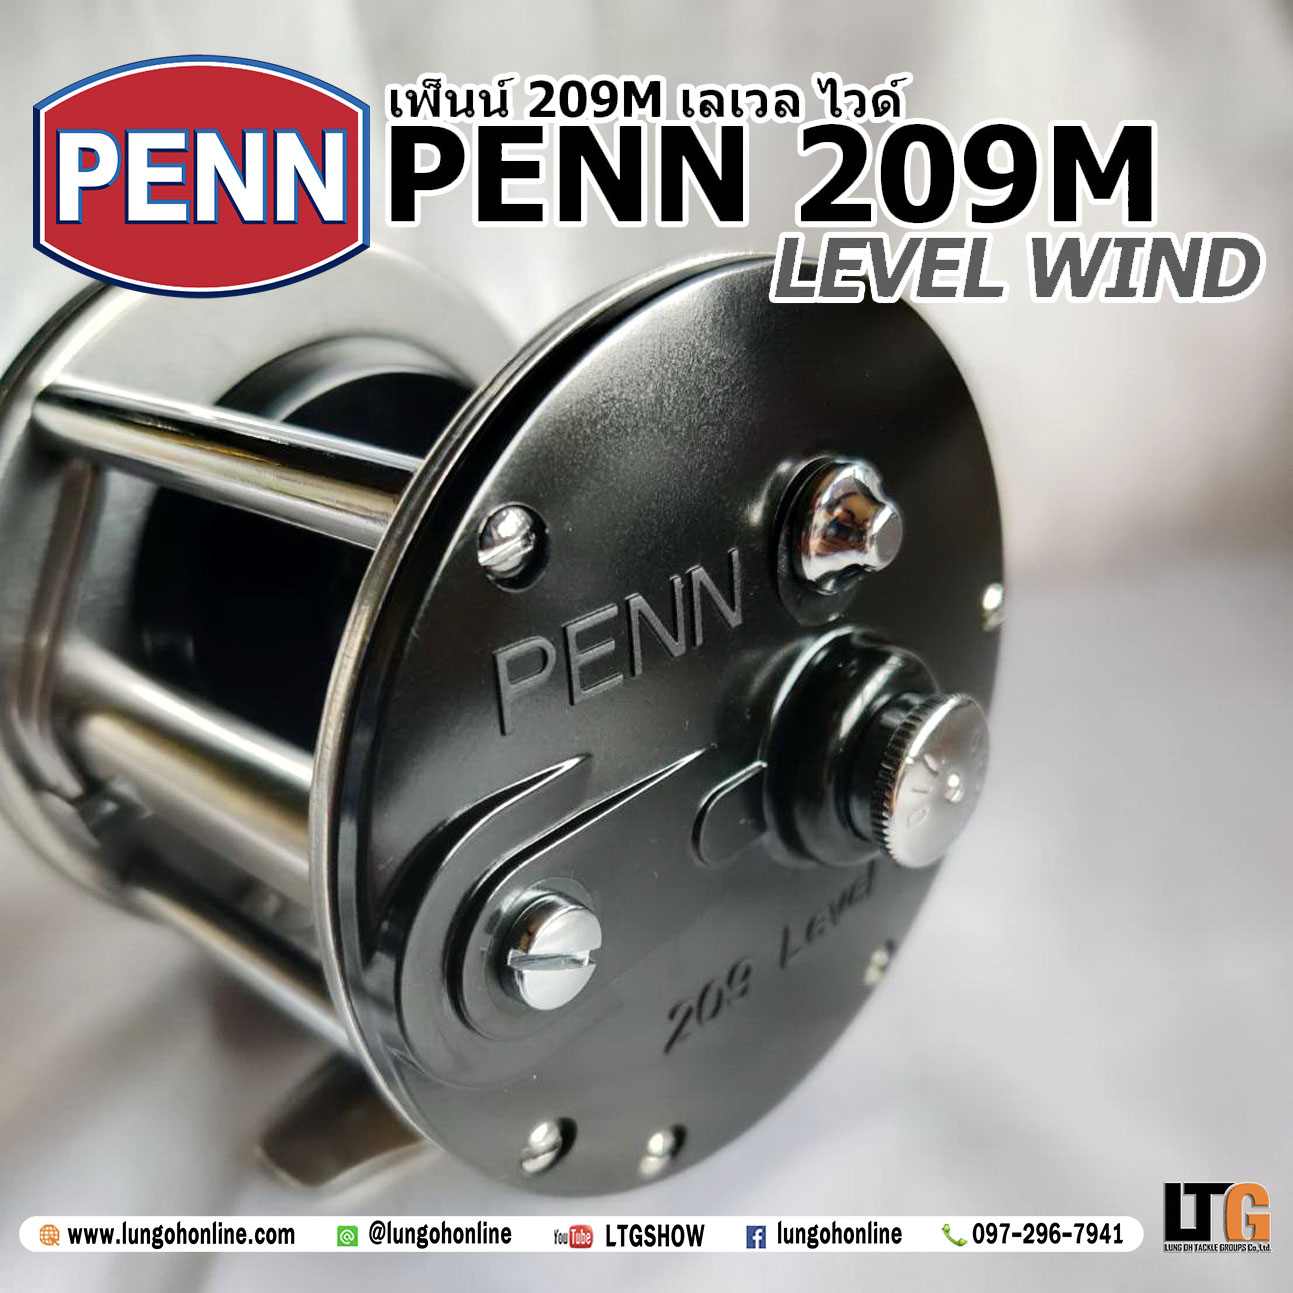 Penn Level Wind 209M*รอกทรอลลิ่ง - 7 SEAS PROSHOP (THAILAND)